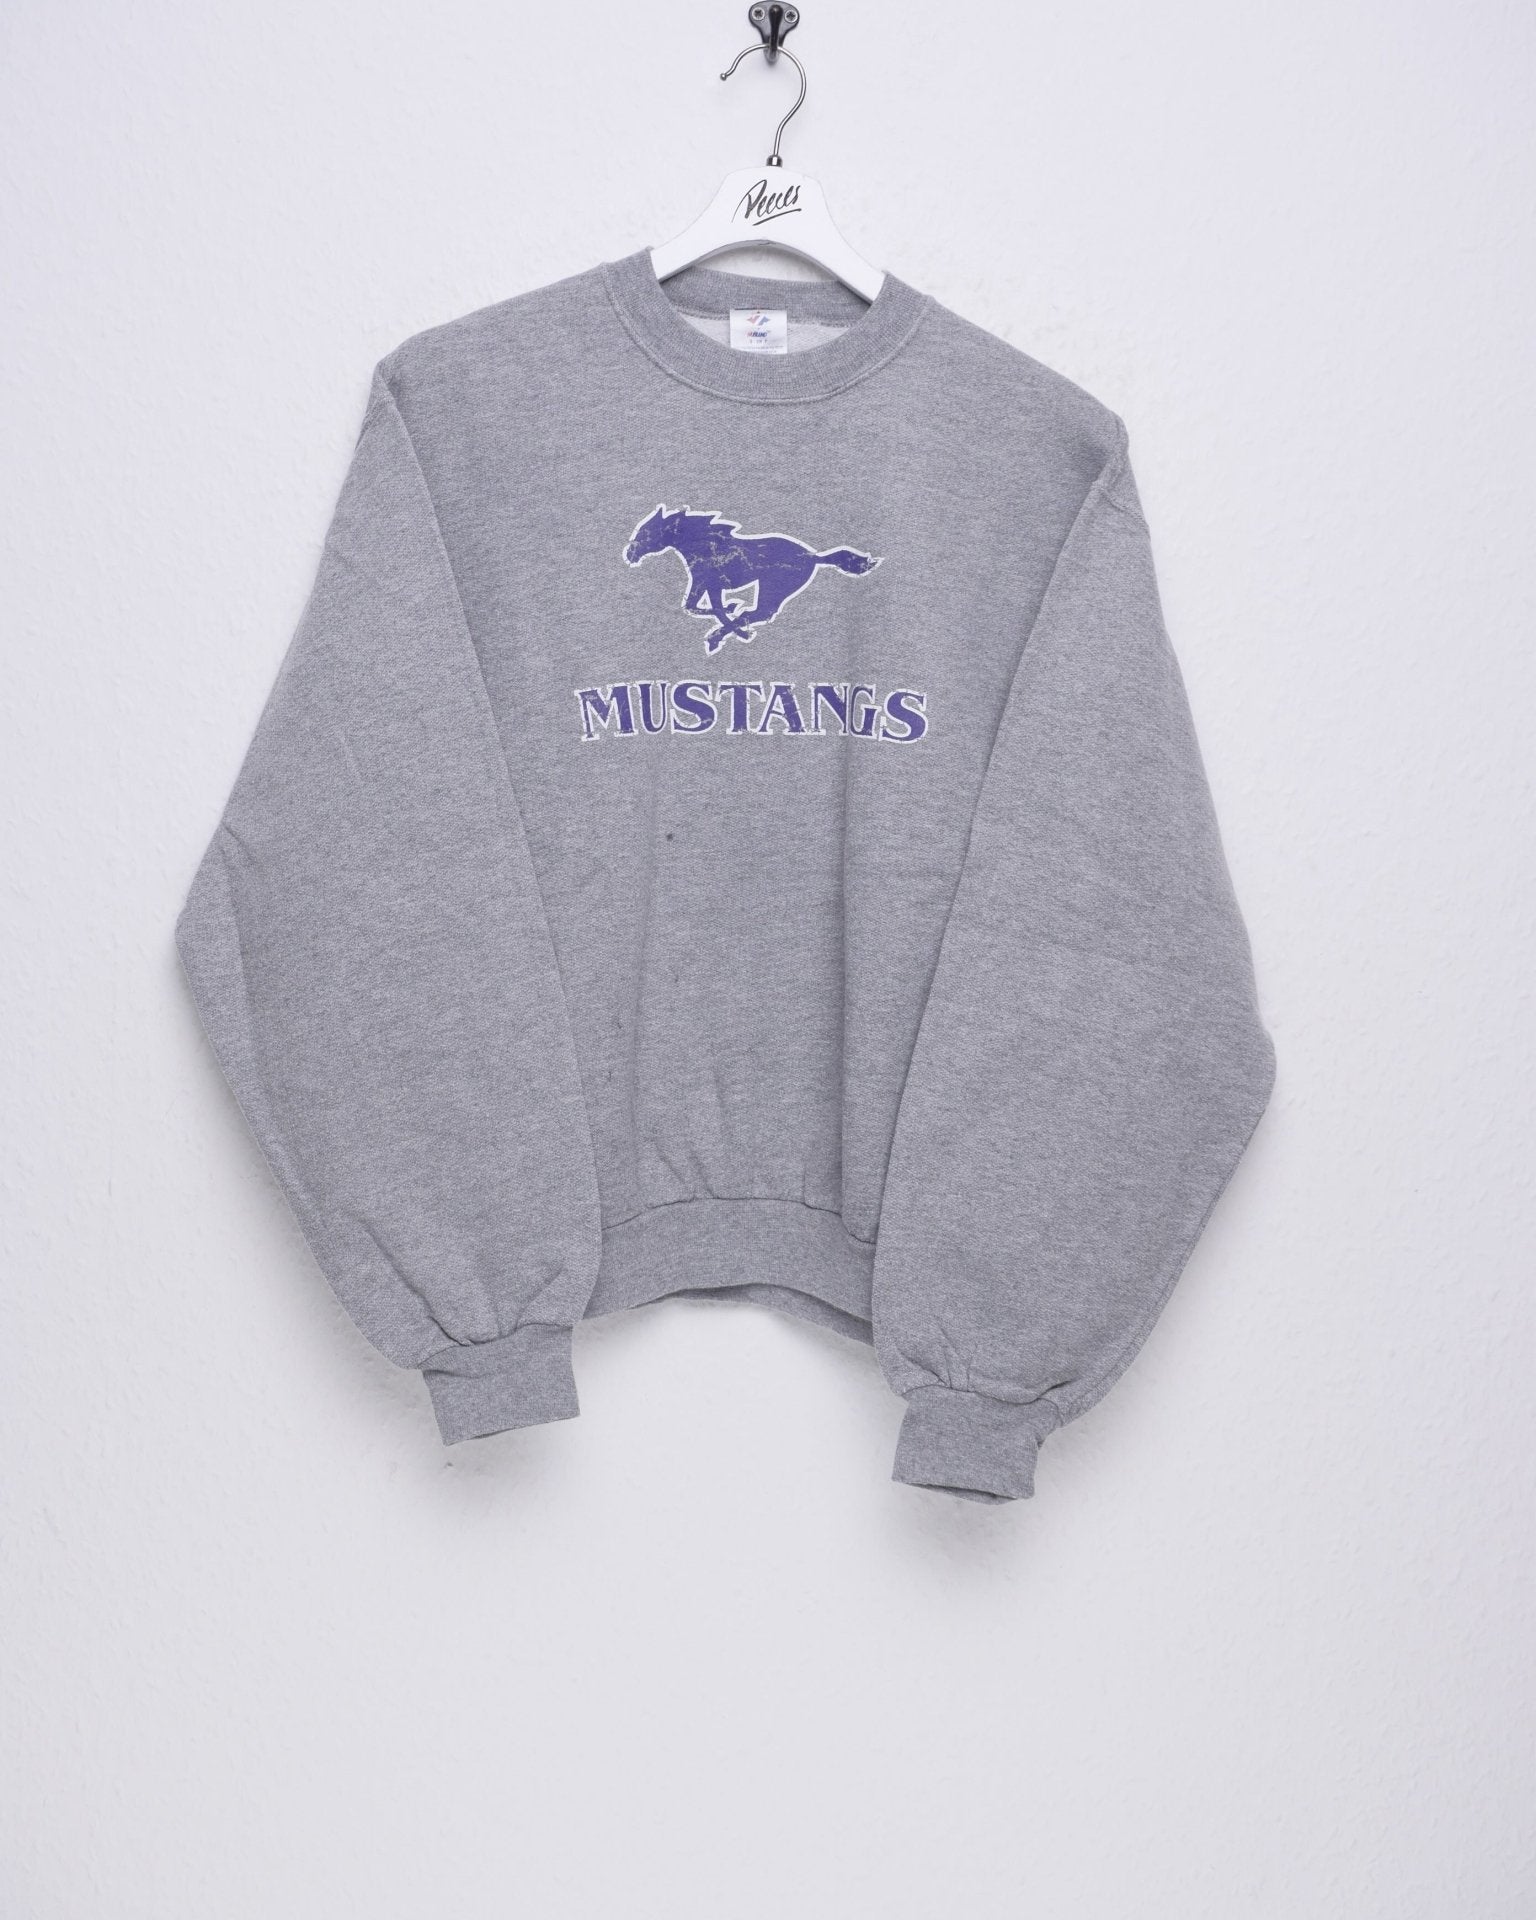 Mustangs printed Logo grey Sweater - Peeces